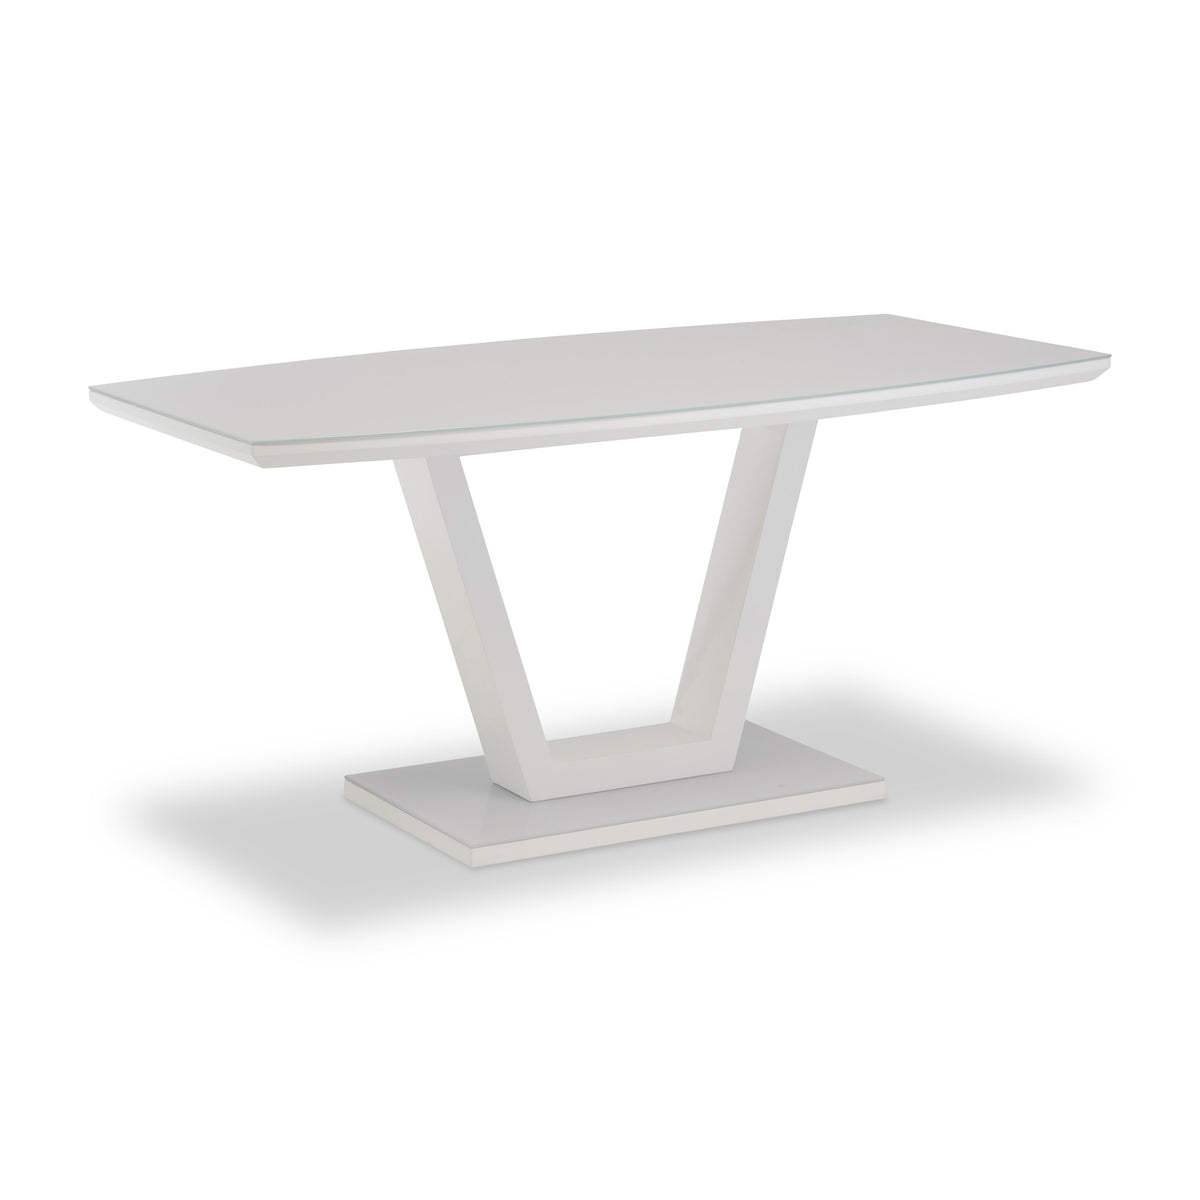 Marco White Gloss 160cm Rectangular Dining Table from Roseland Furniture